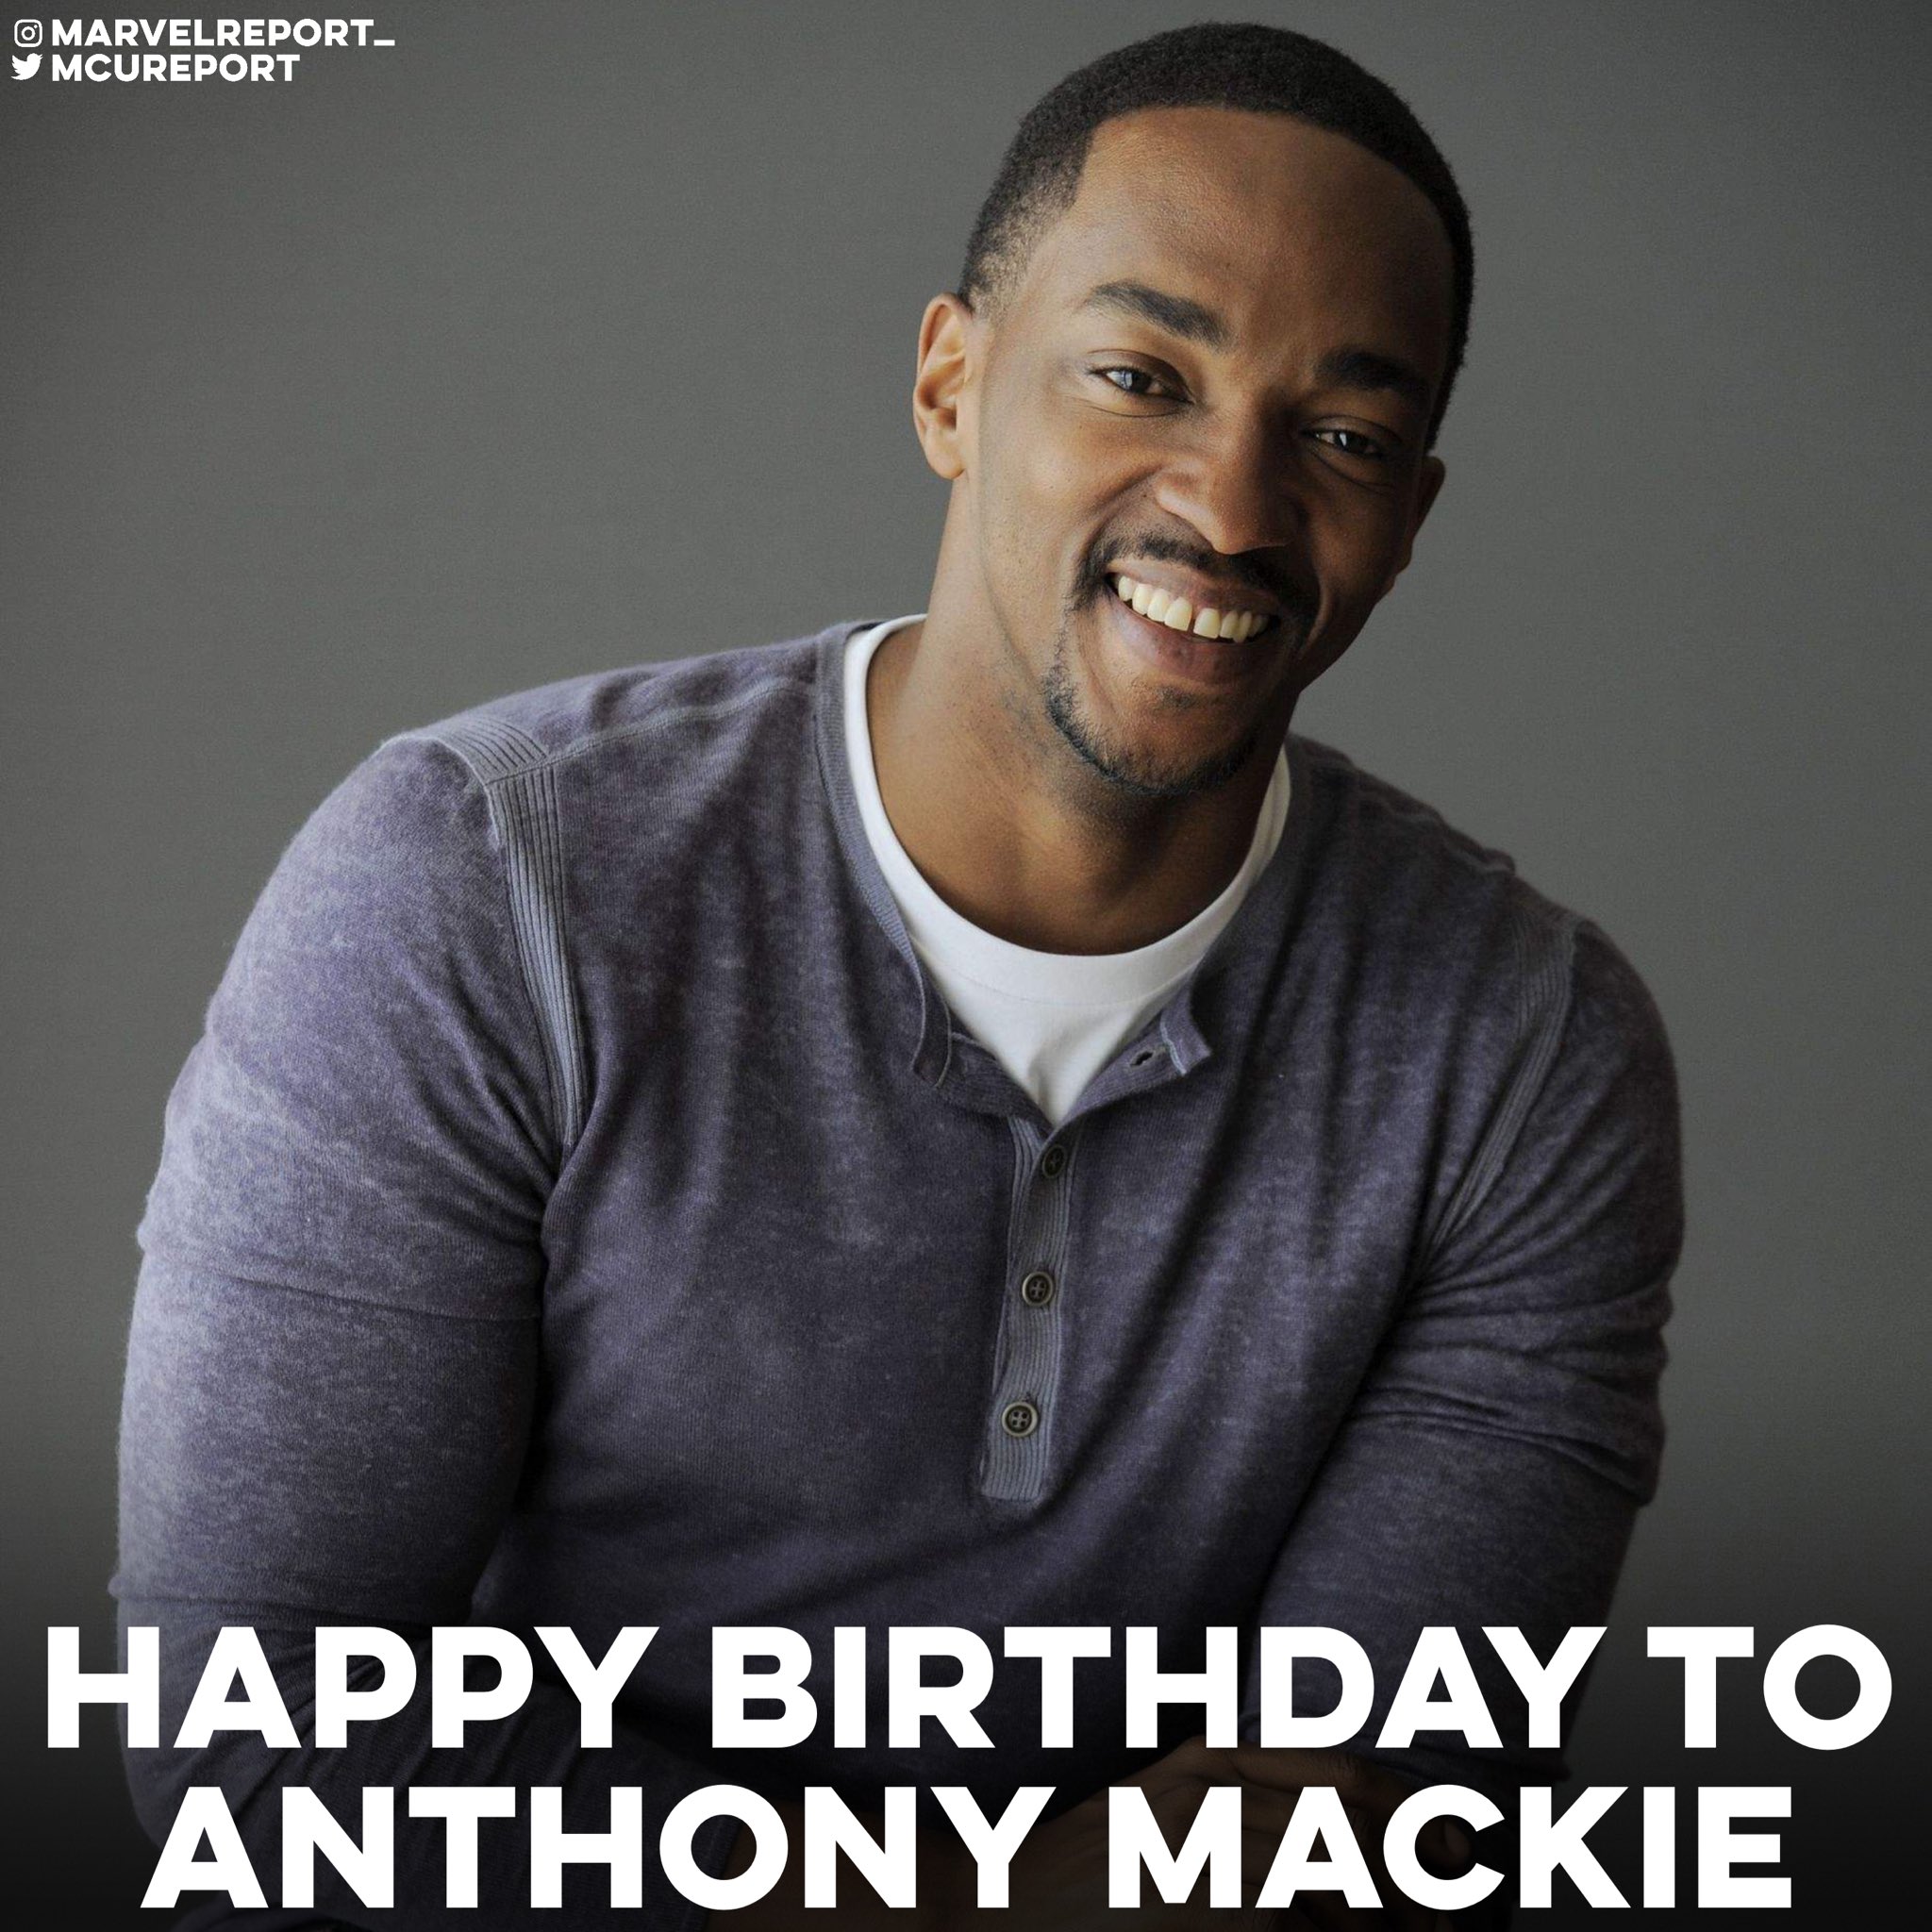 Happy Birthday to Anthony Mackie who turns 43 today 